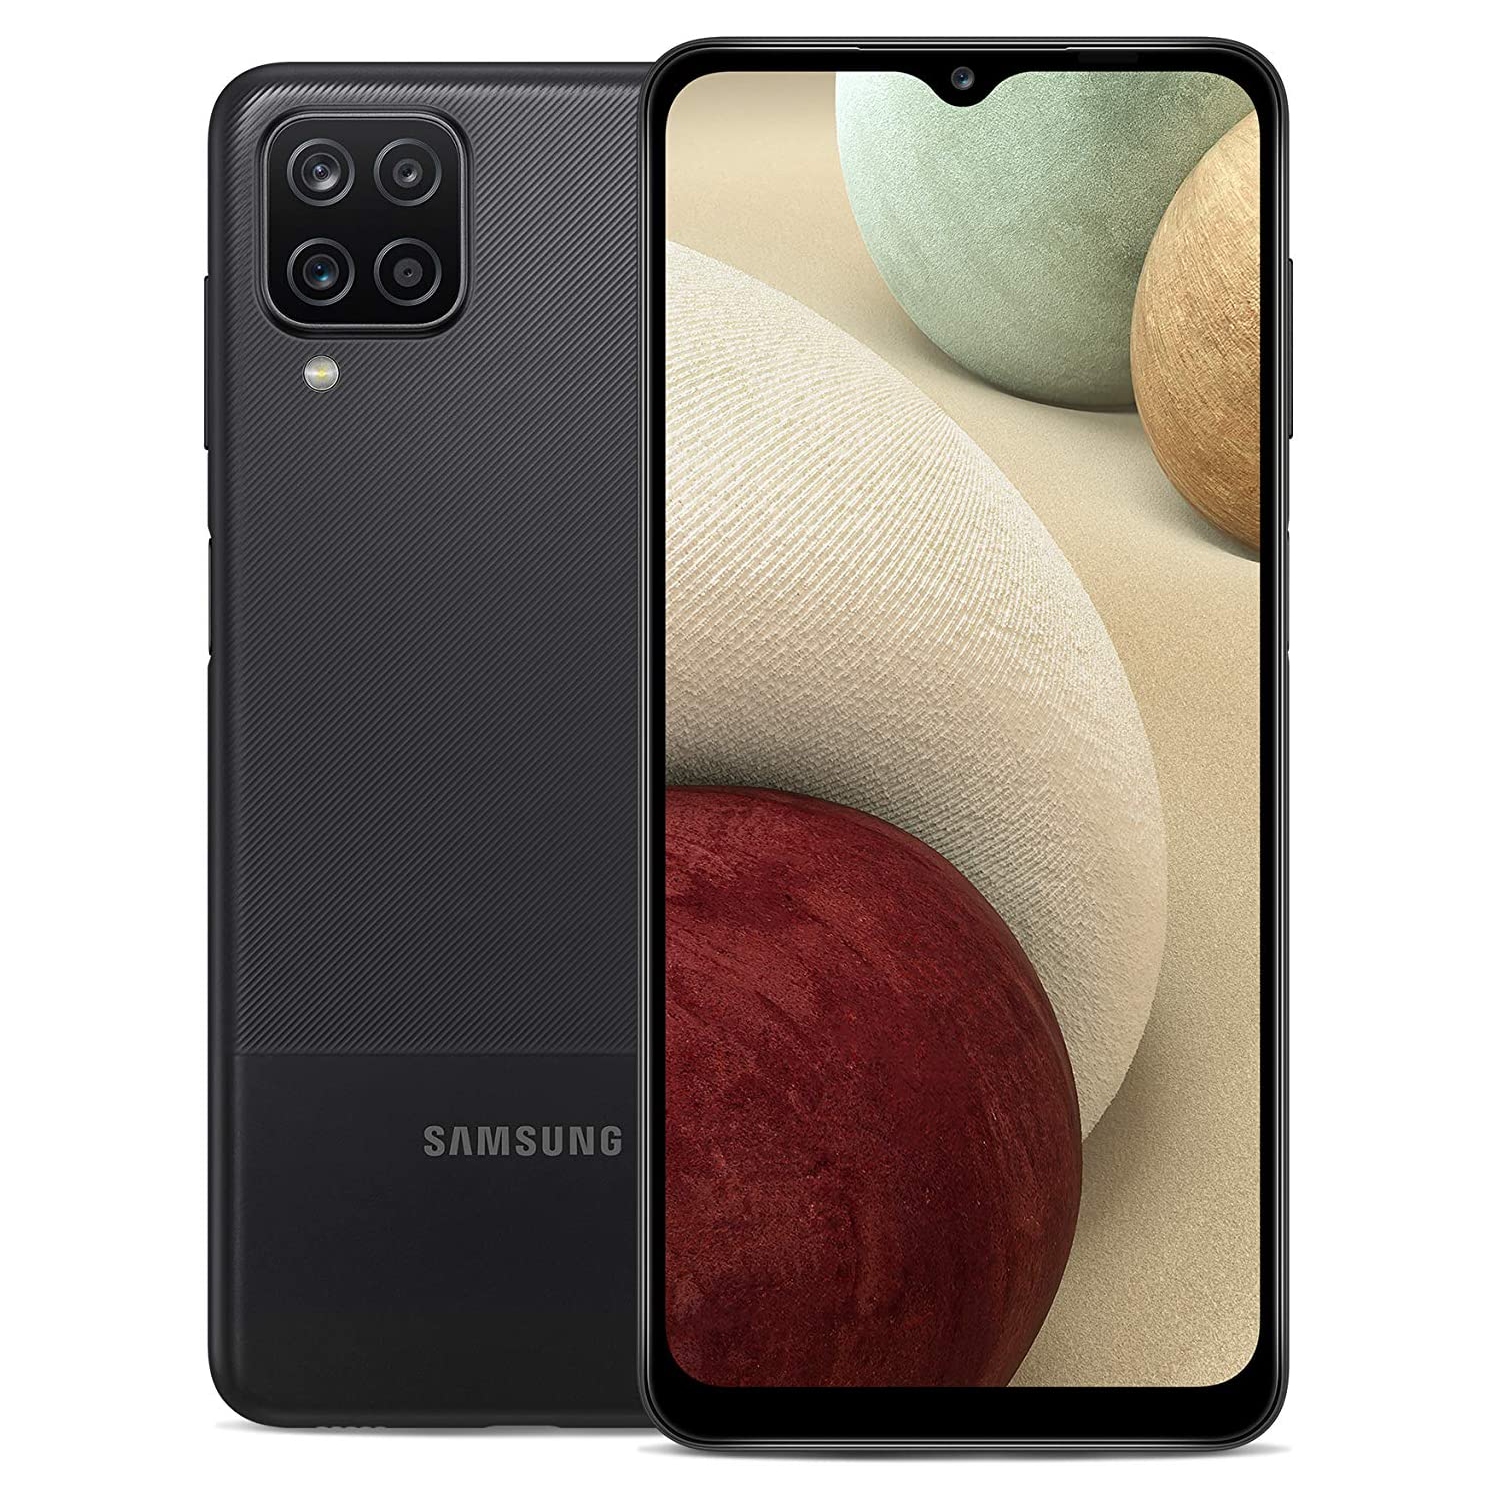 Refurbished (Excellent) - Samsung Galaxy A12 (SM-A125U) 32GB - GSM Unlocked Smartphone - International Model - Black - Certified Refurbished